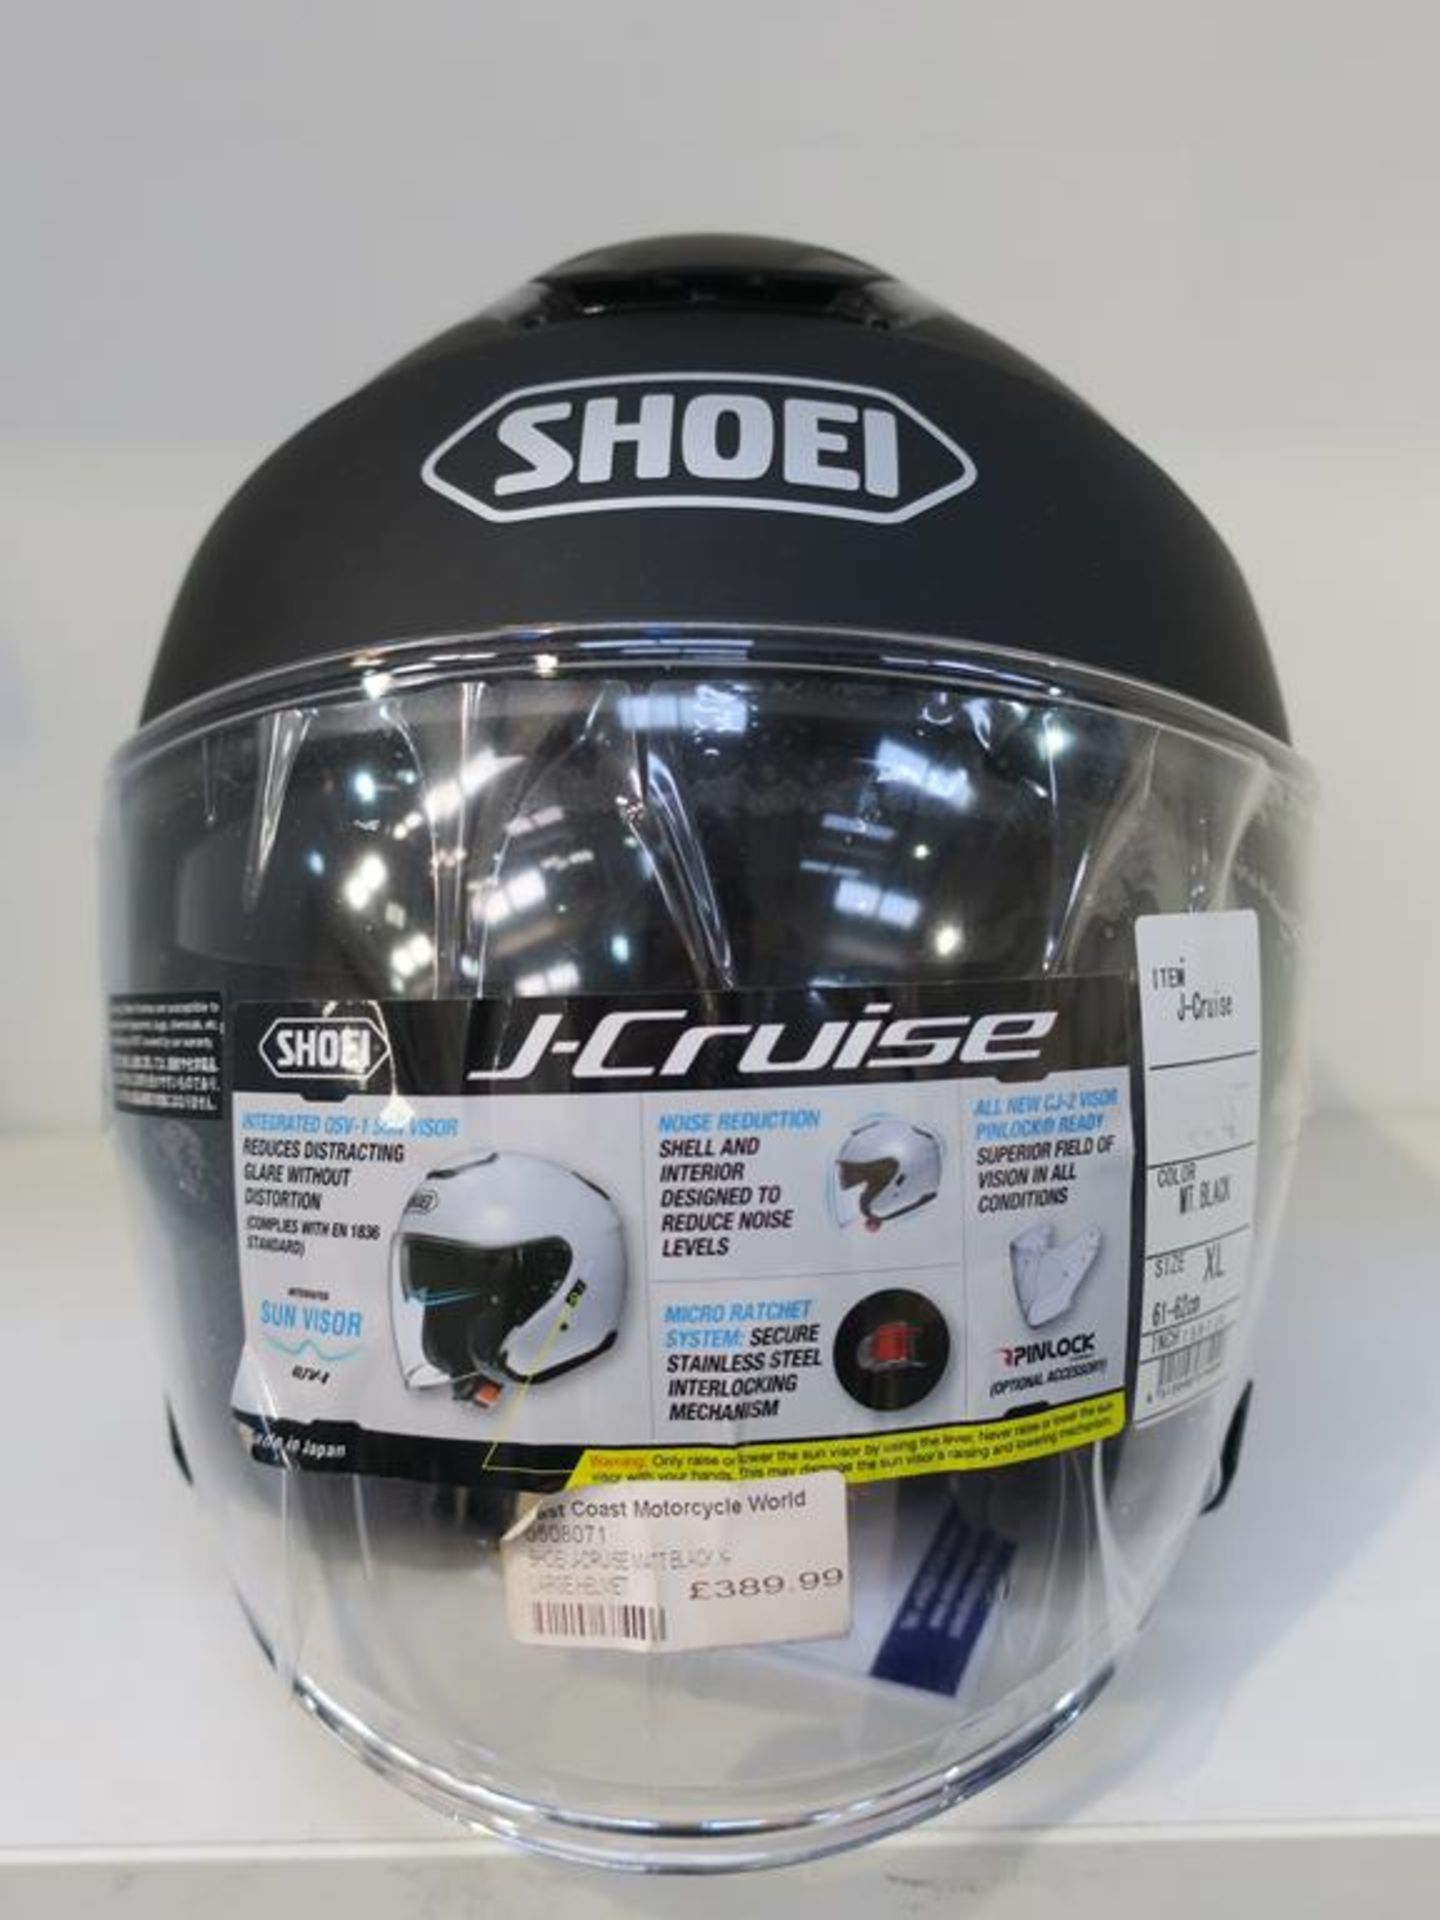 * A Shoei J-Cruise XL Matt Black Helmet (RRP £389.99) - Image 2 of 4